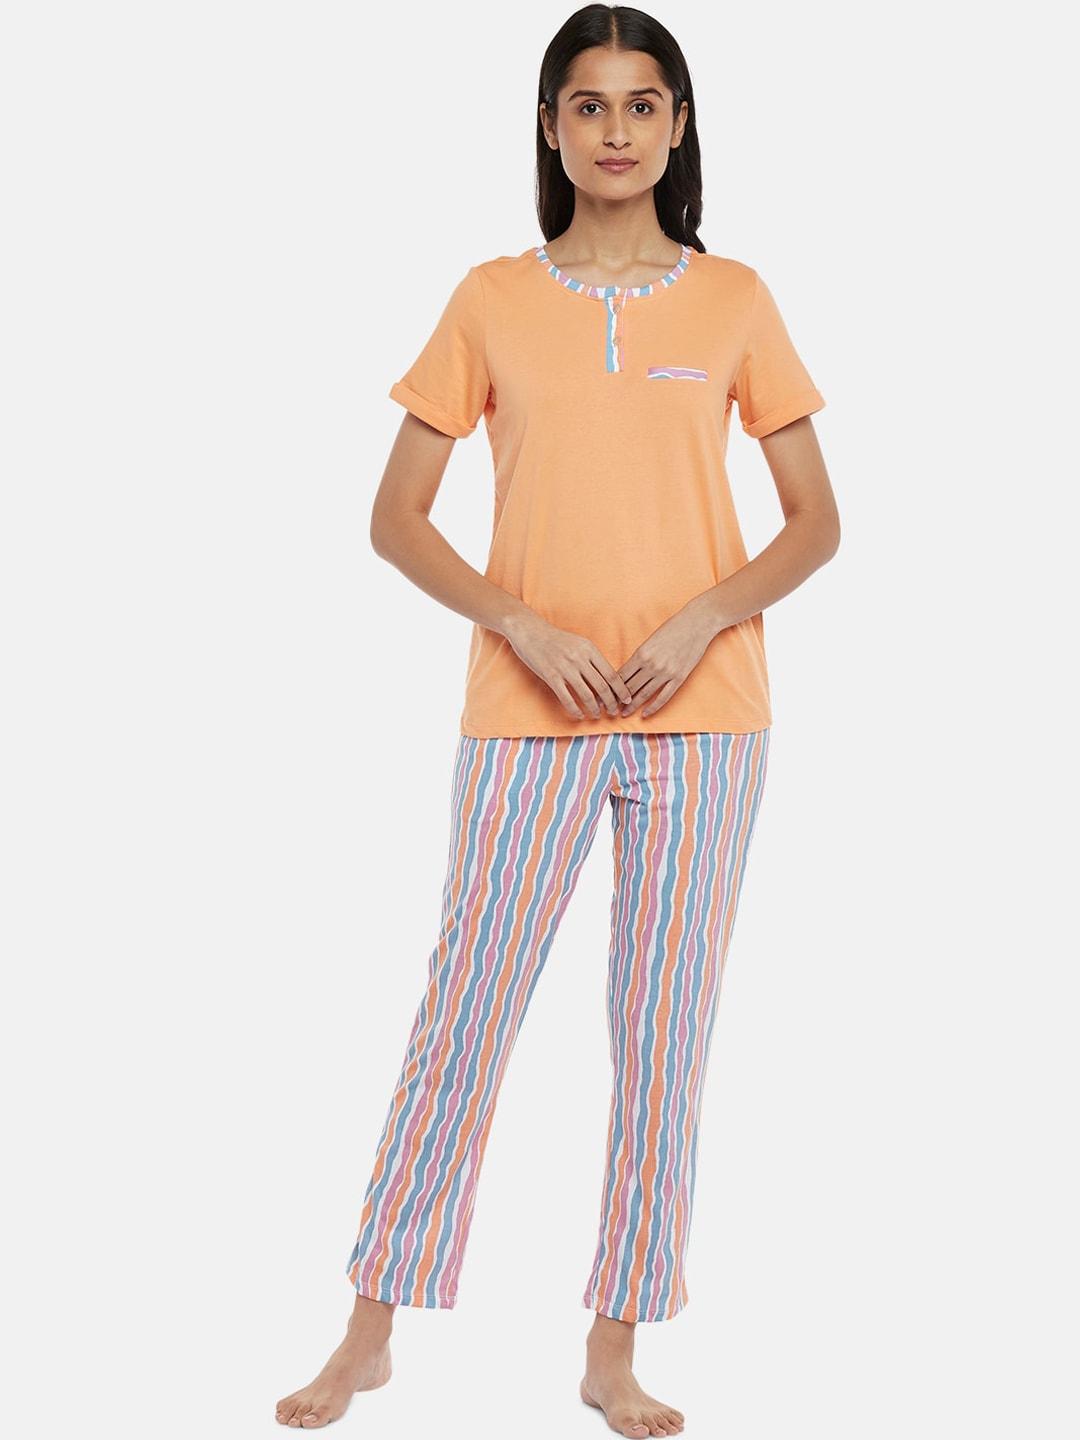 Dreamz by Pantaloons Women Orange & Blue Night suit